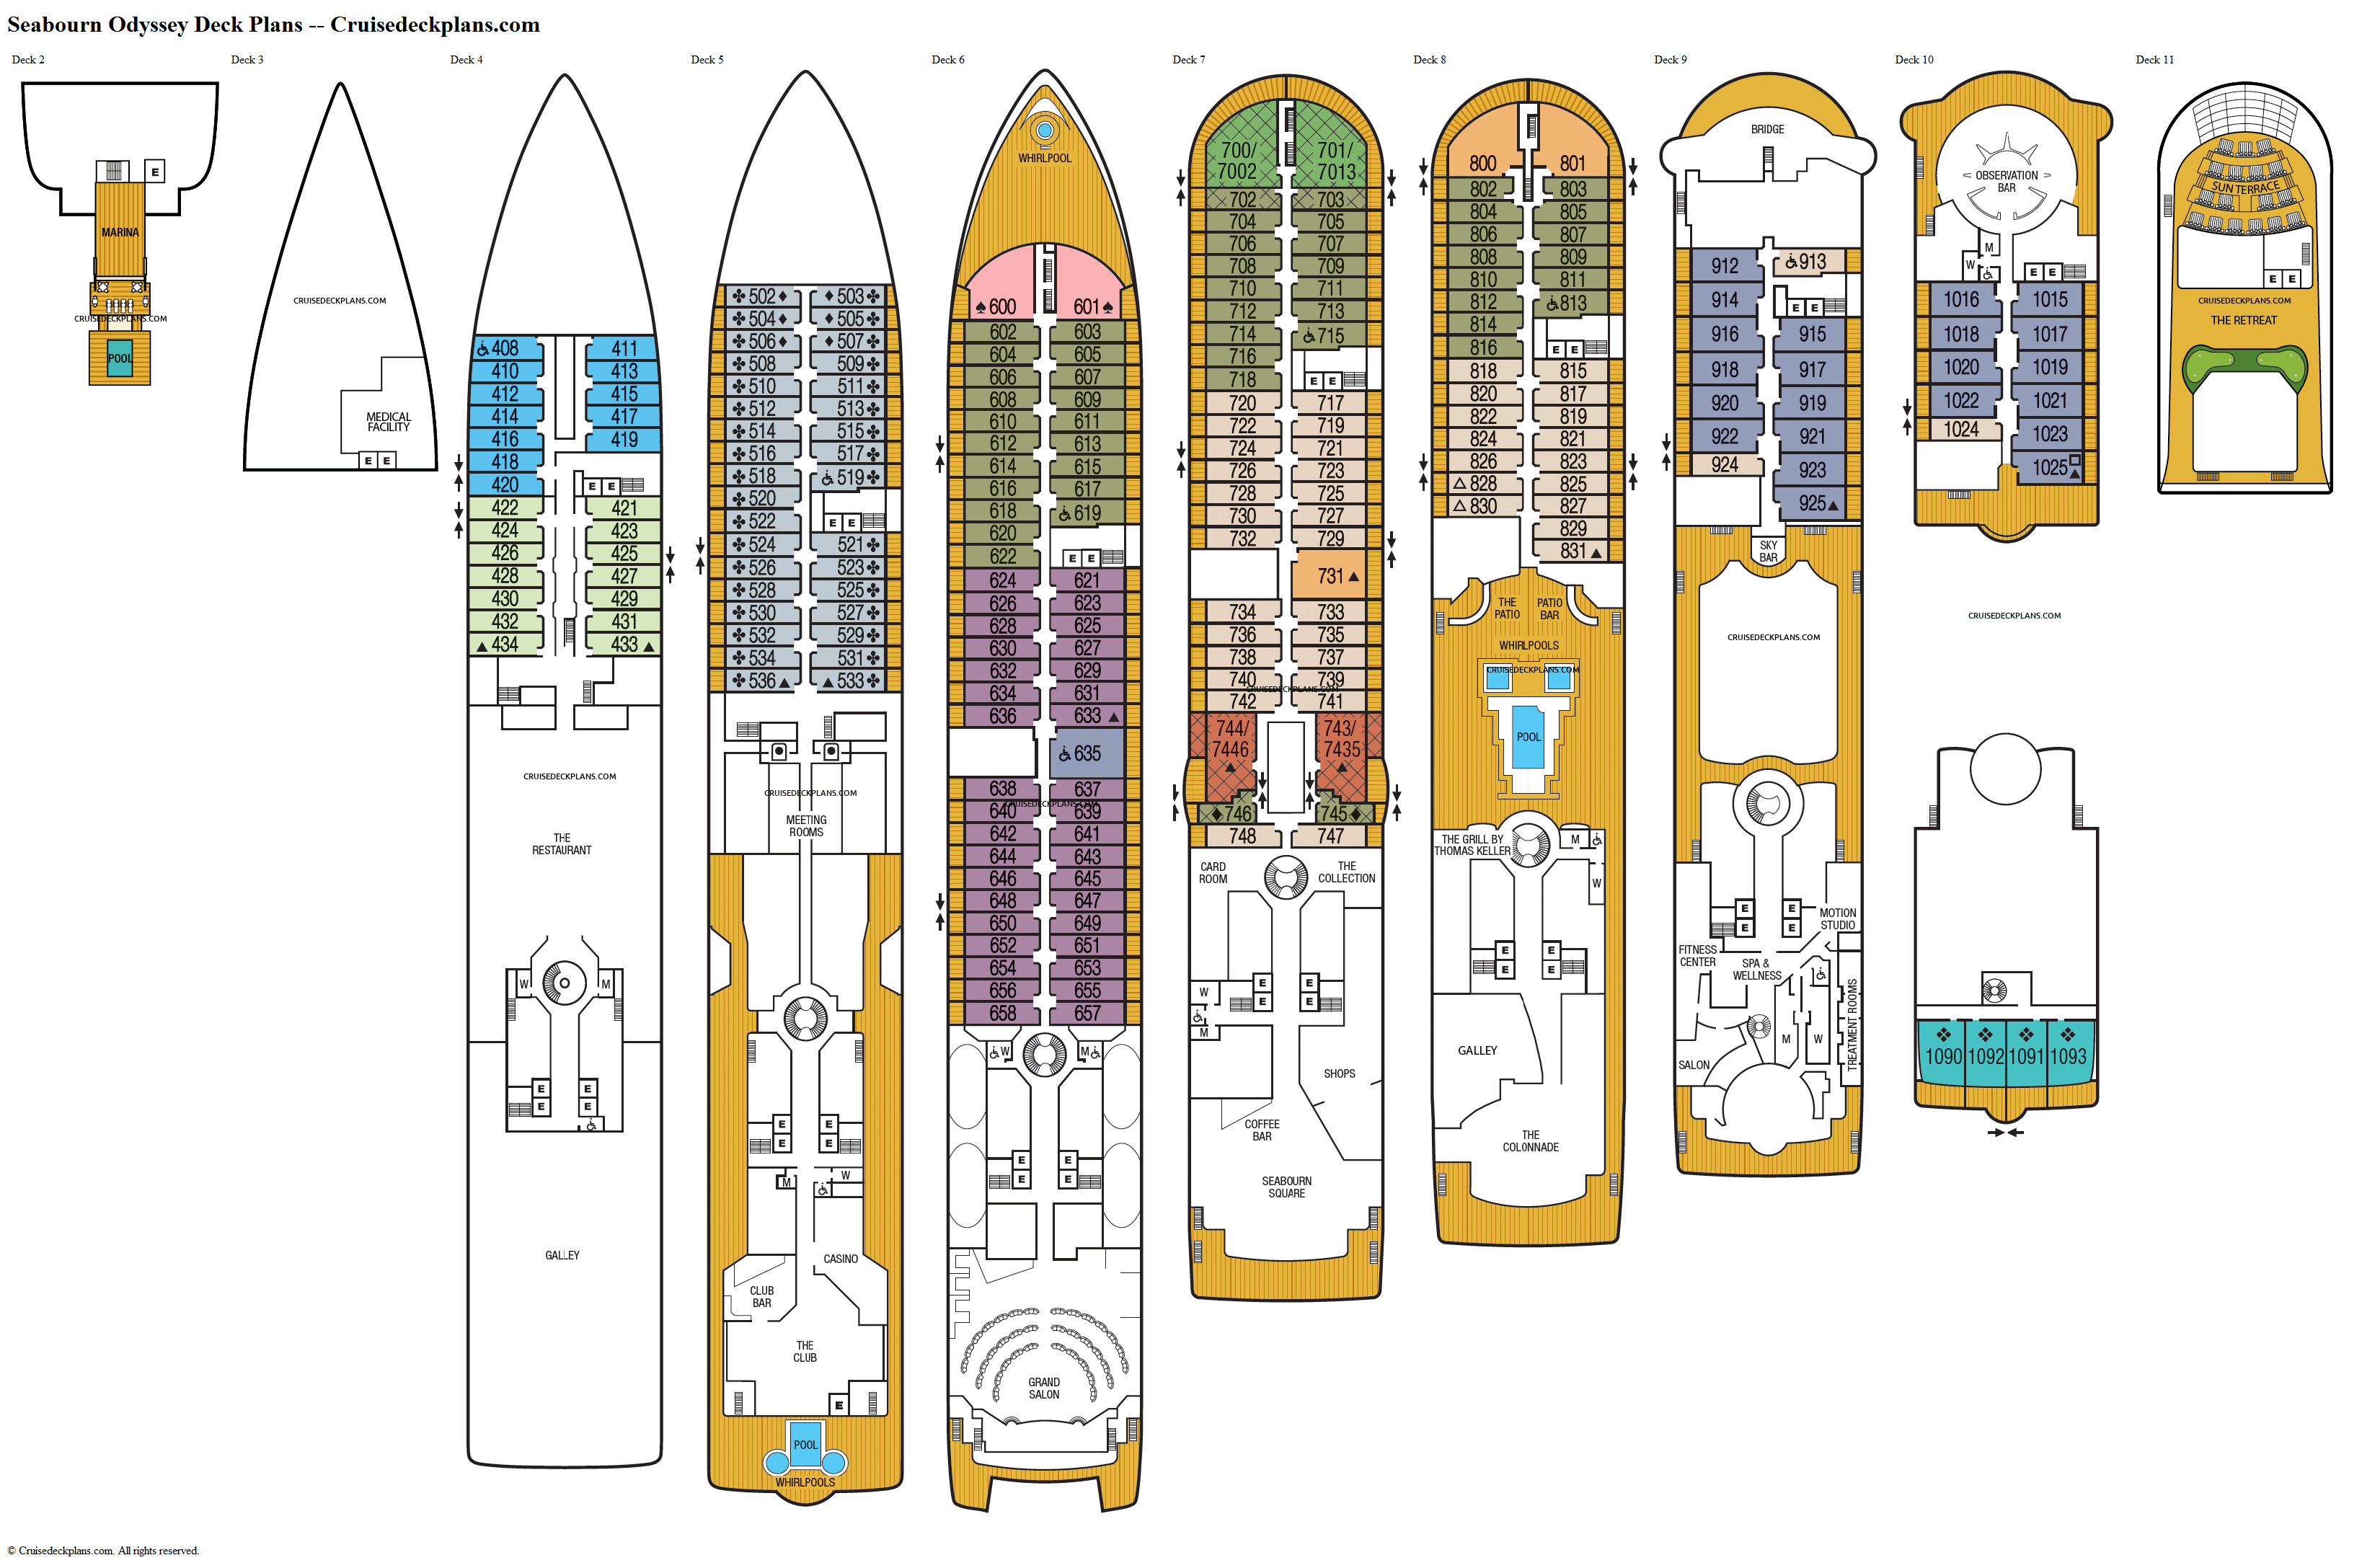 Seabourn Odyssey Deck 6 Deck Plan Tour